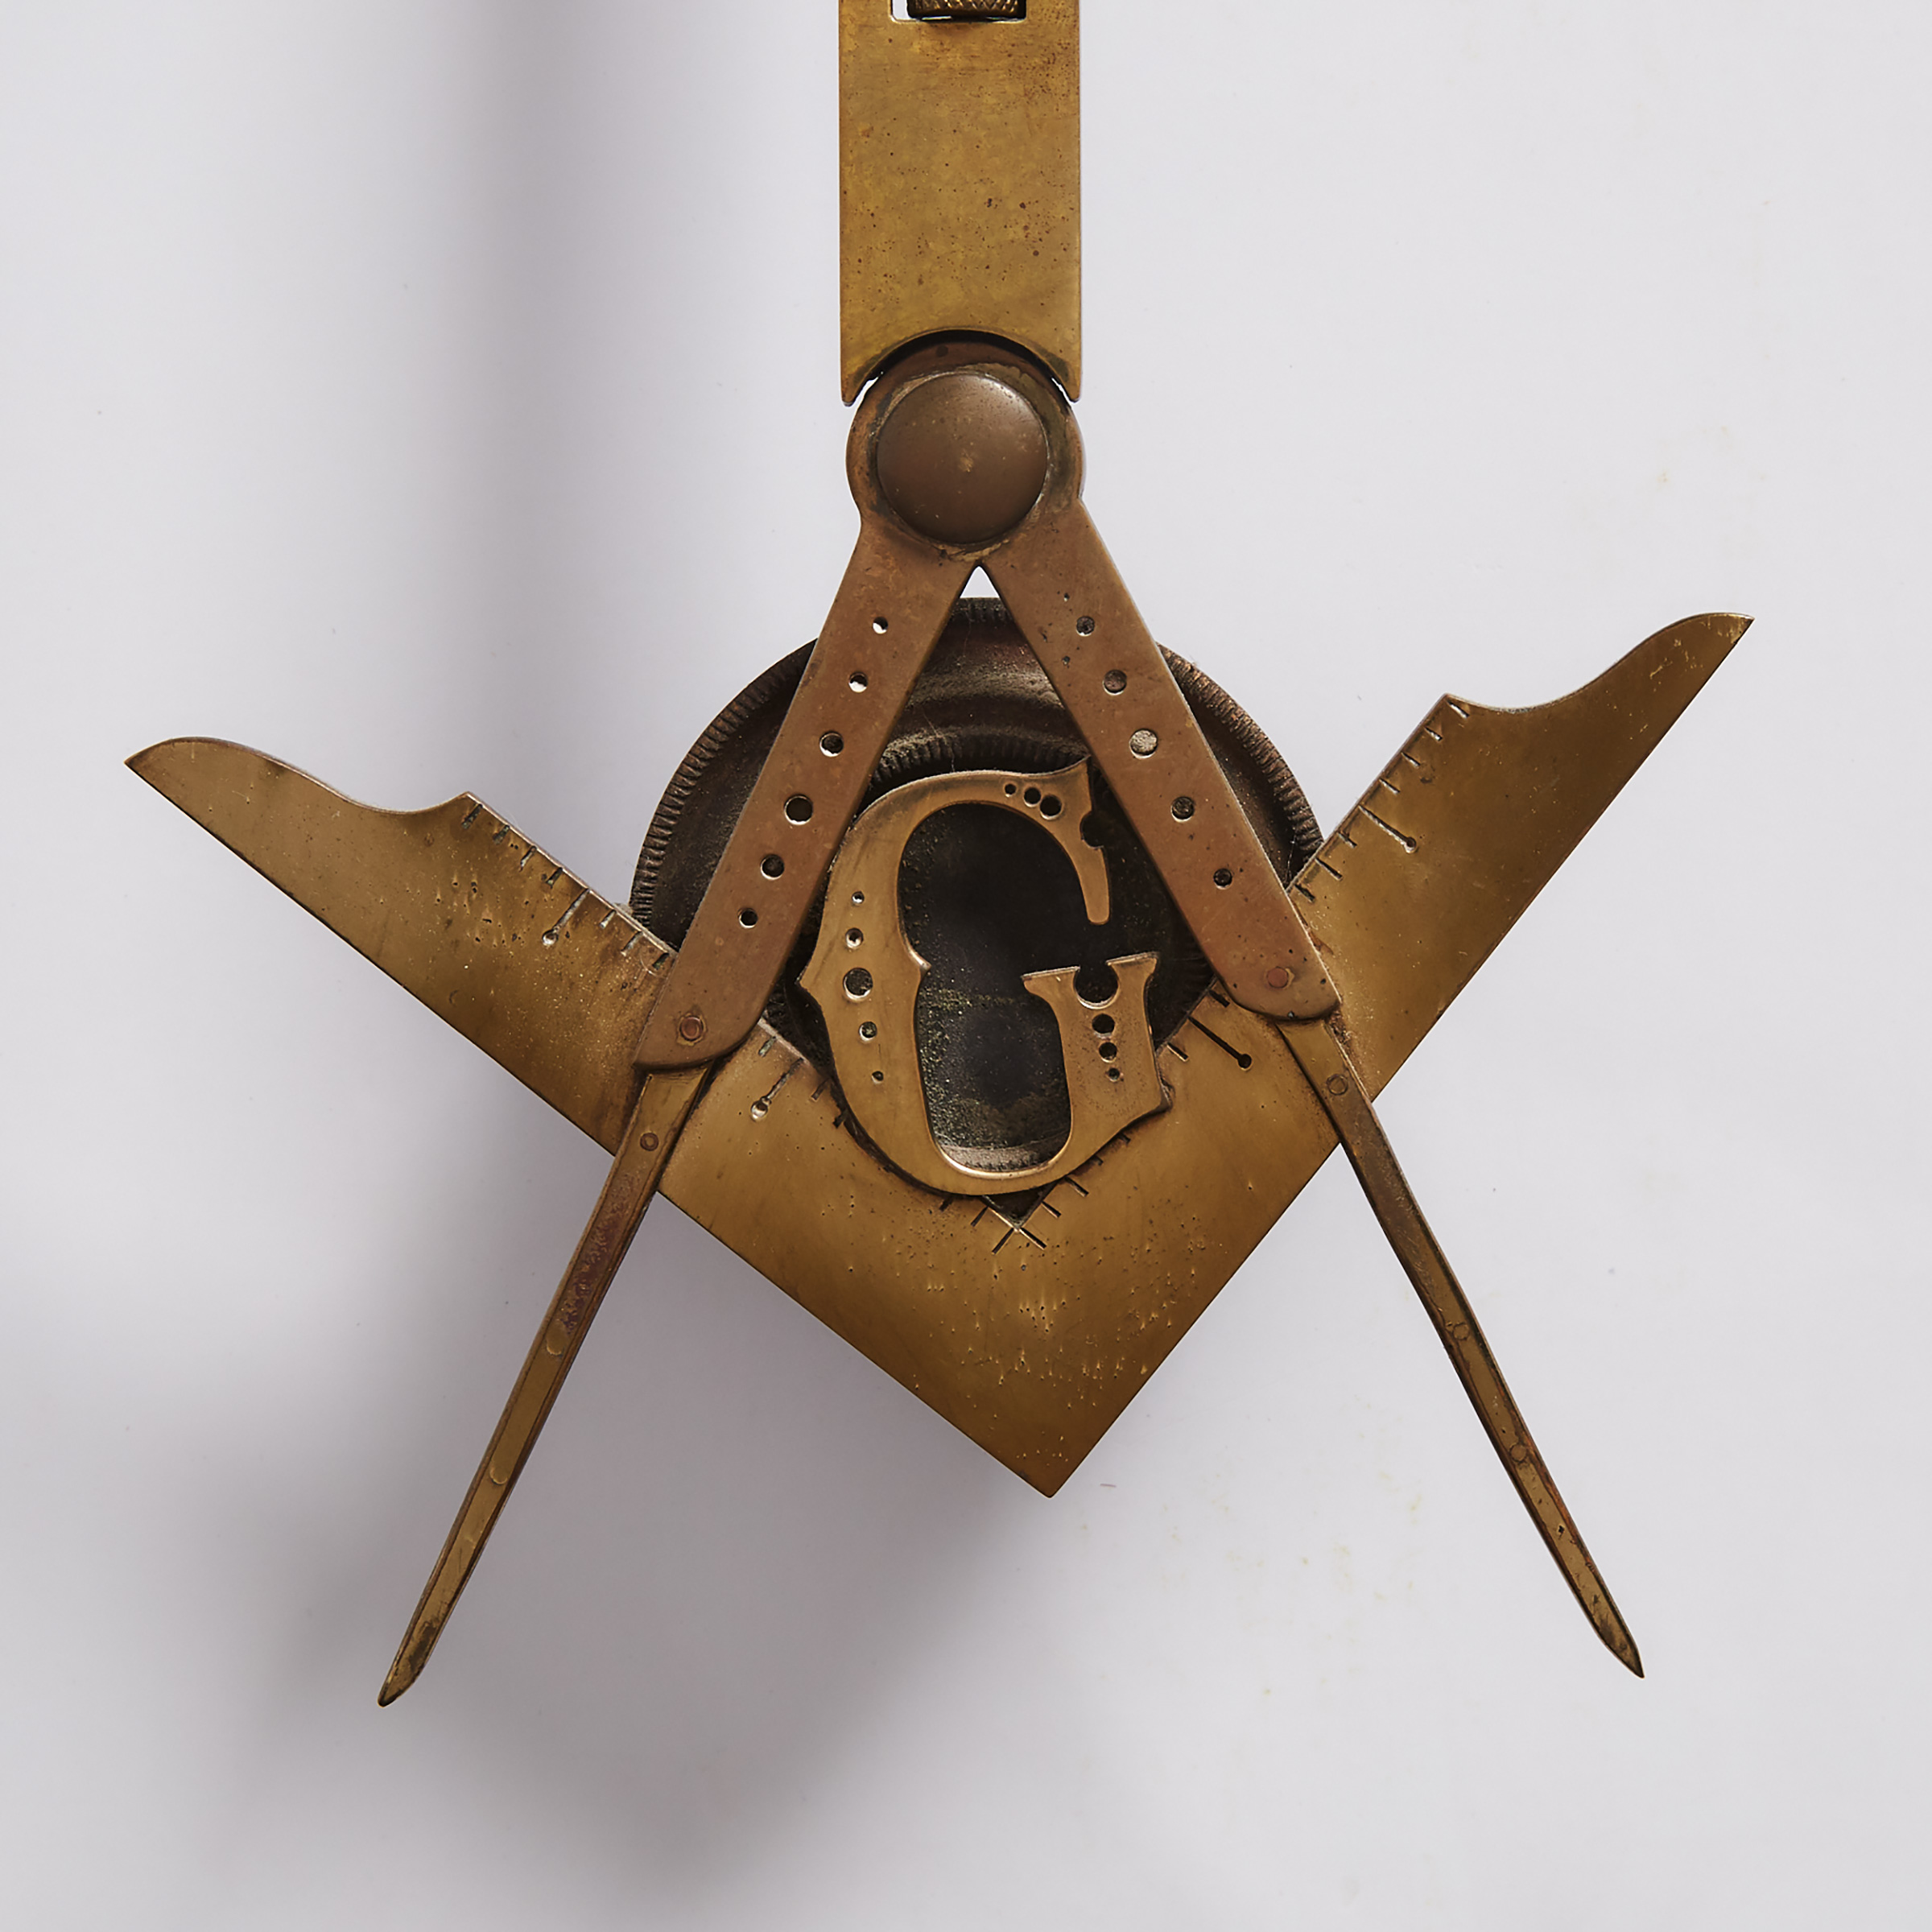 Seth Thomas Masonic Oak and Brass Regulator Number 40 Wall Clock, c.1910